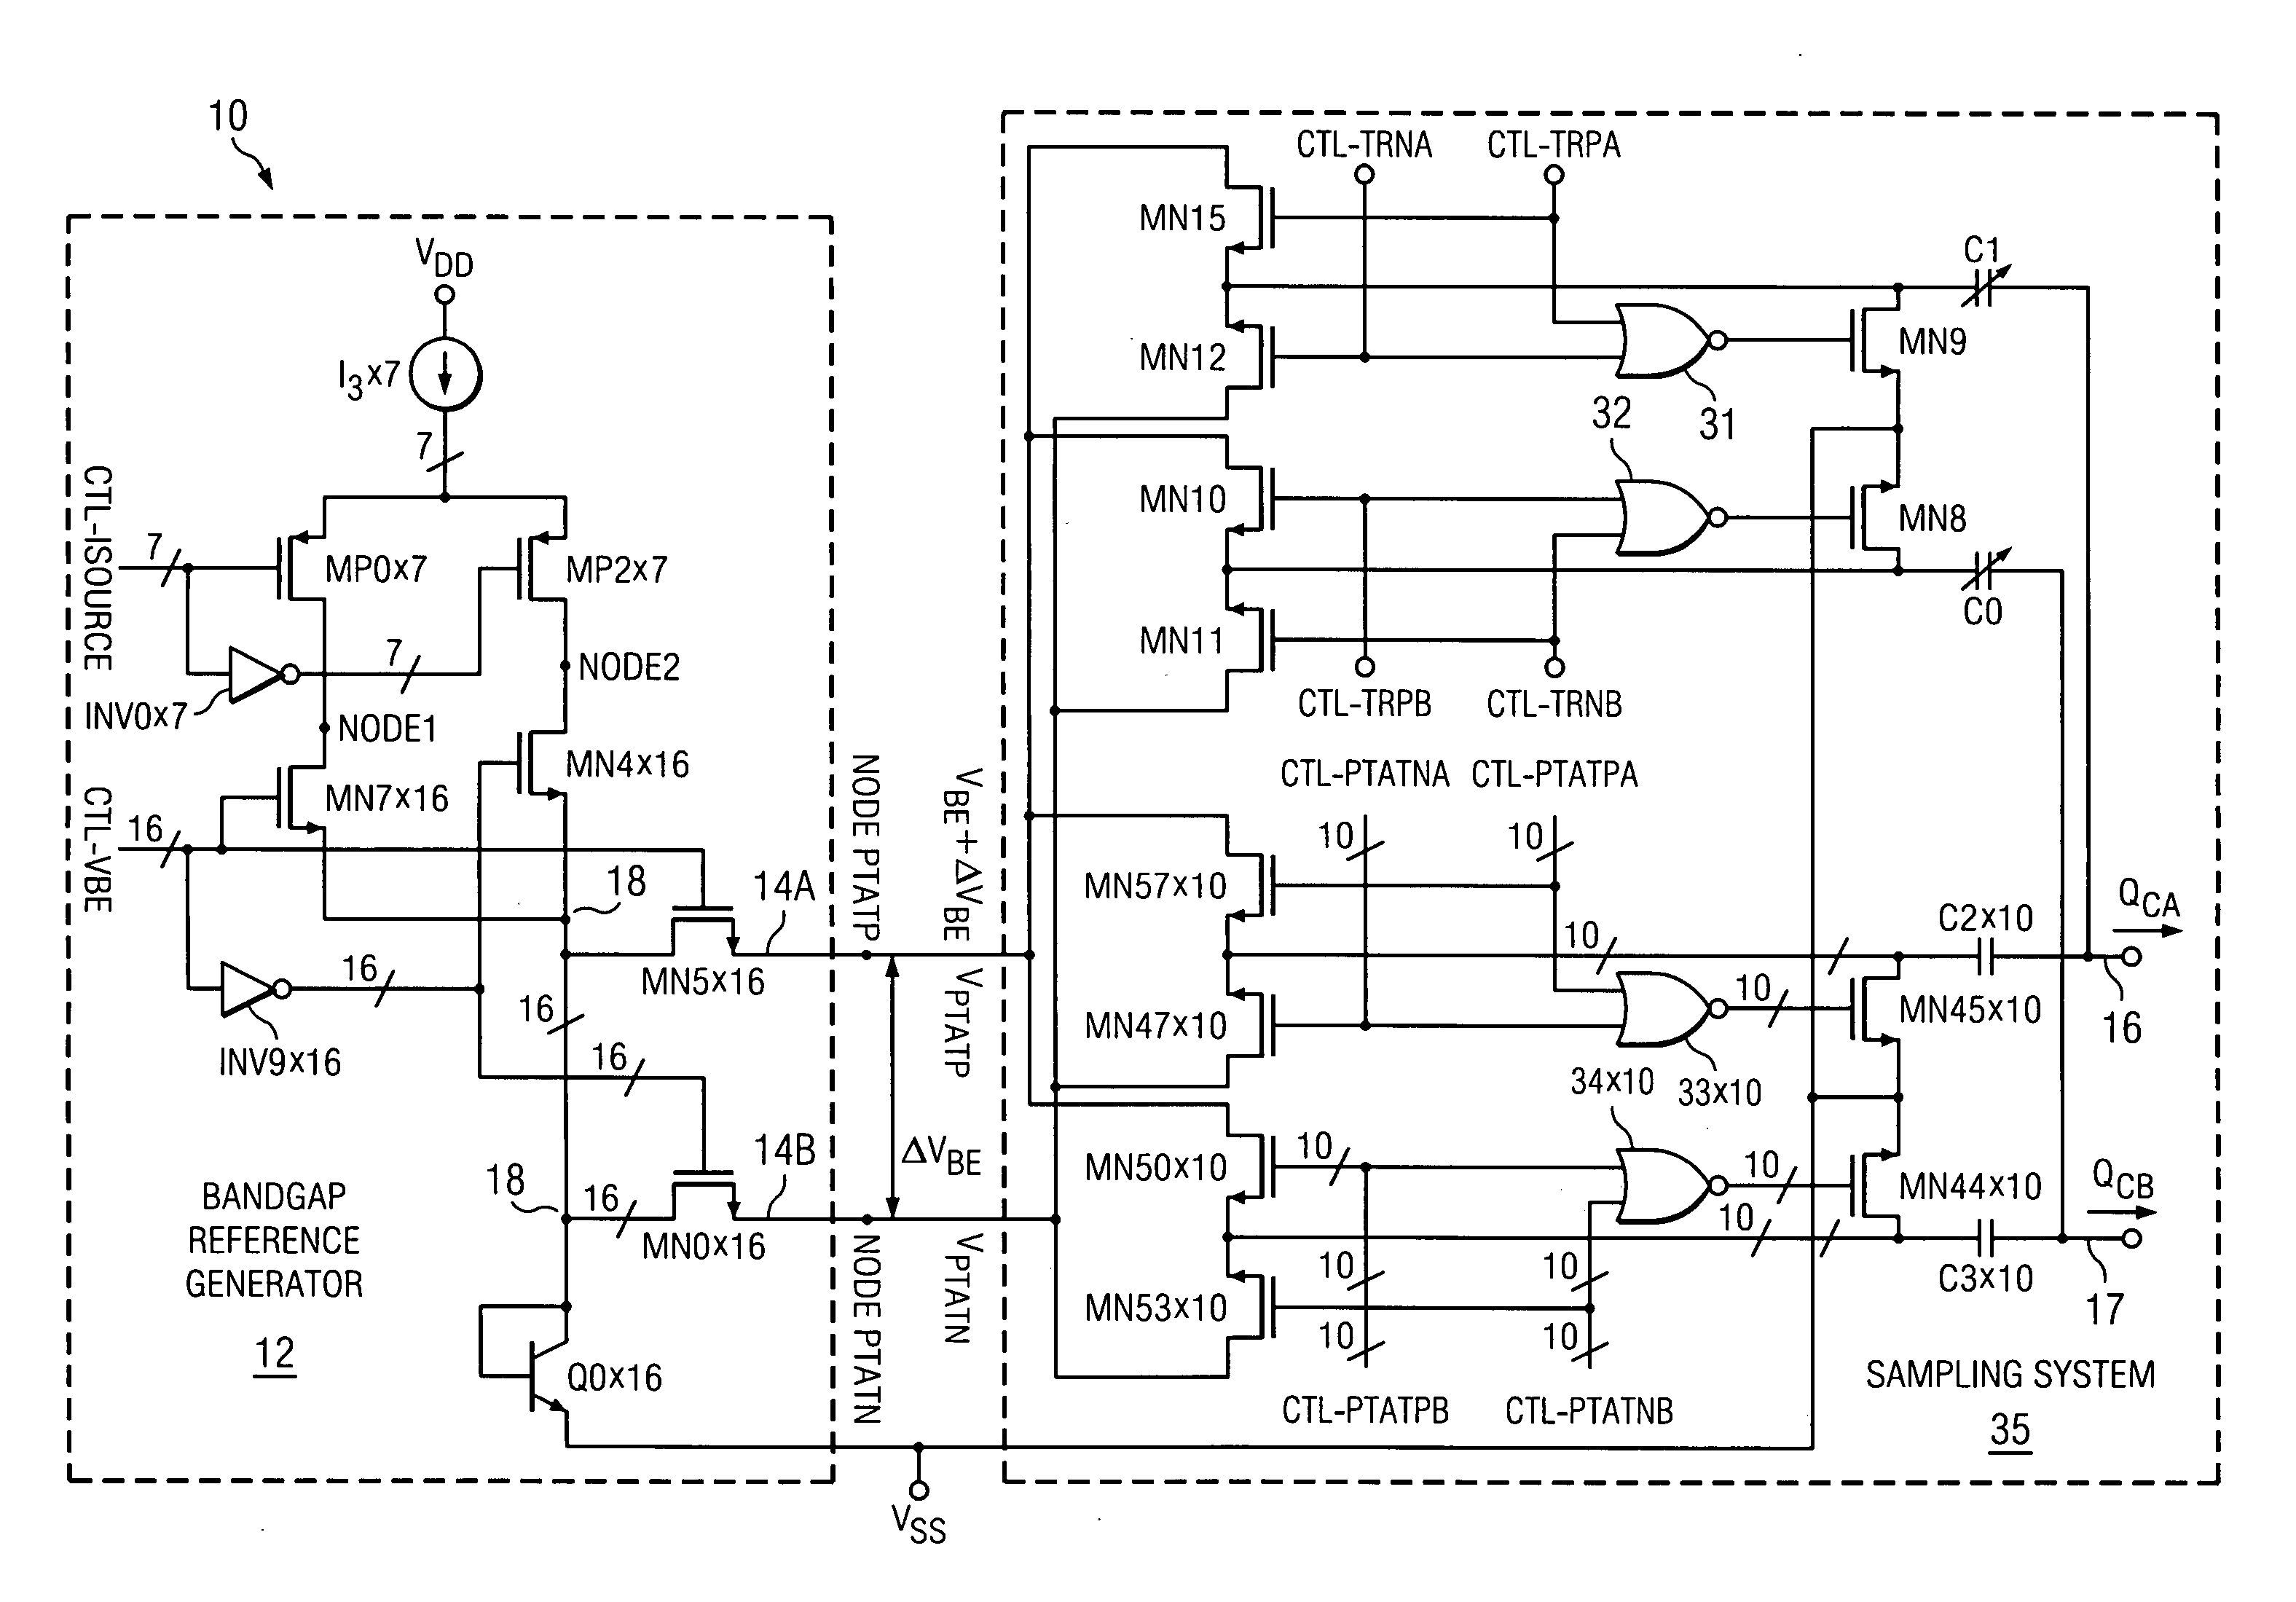 Bandgap reference circuit and method